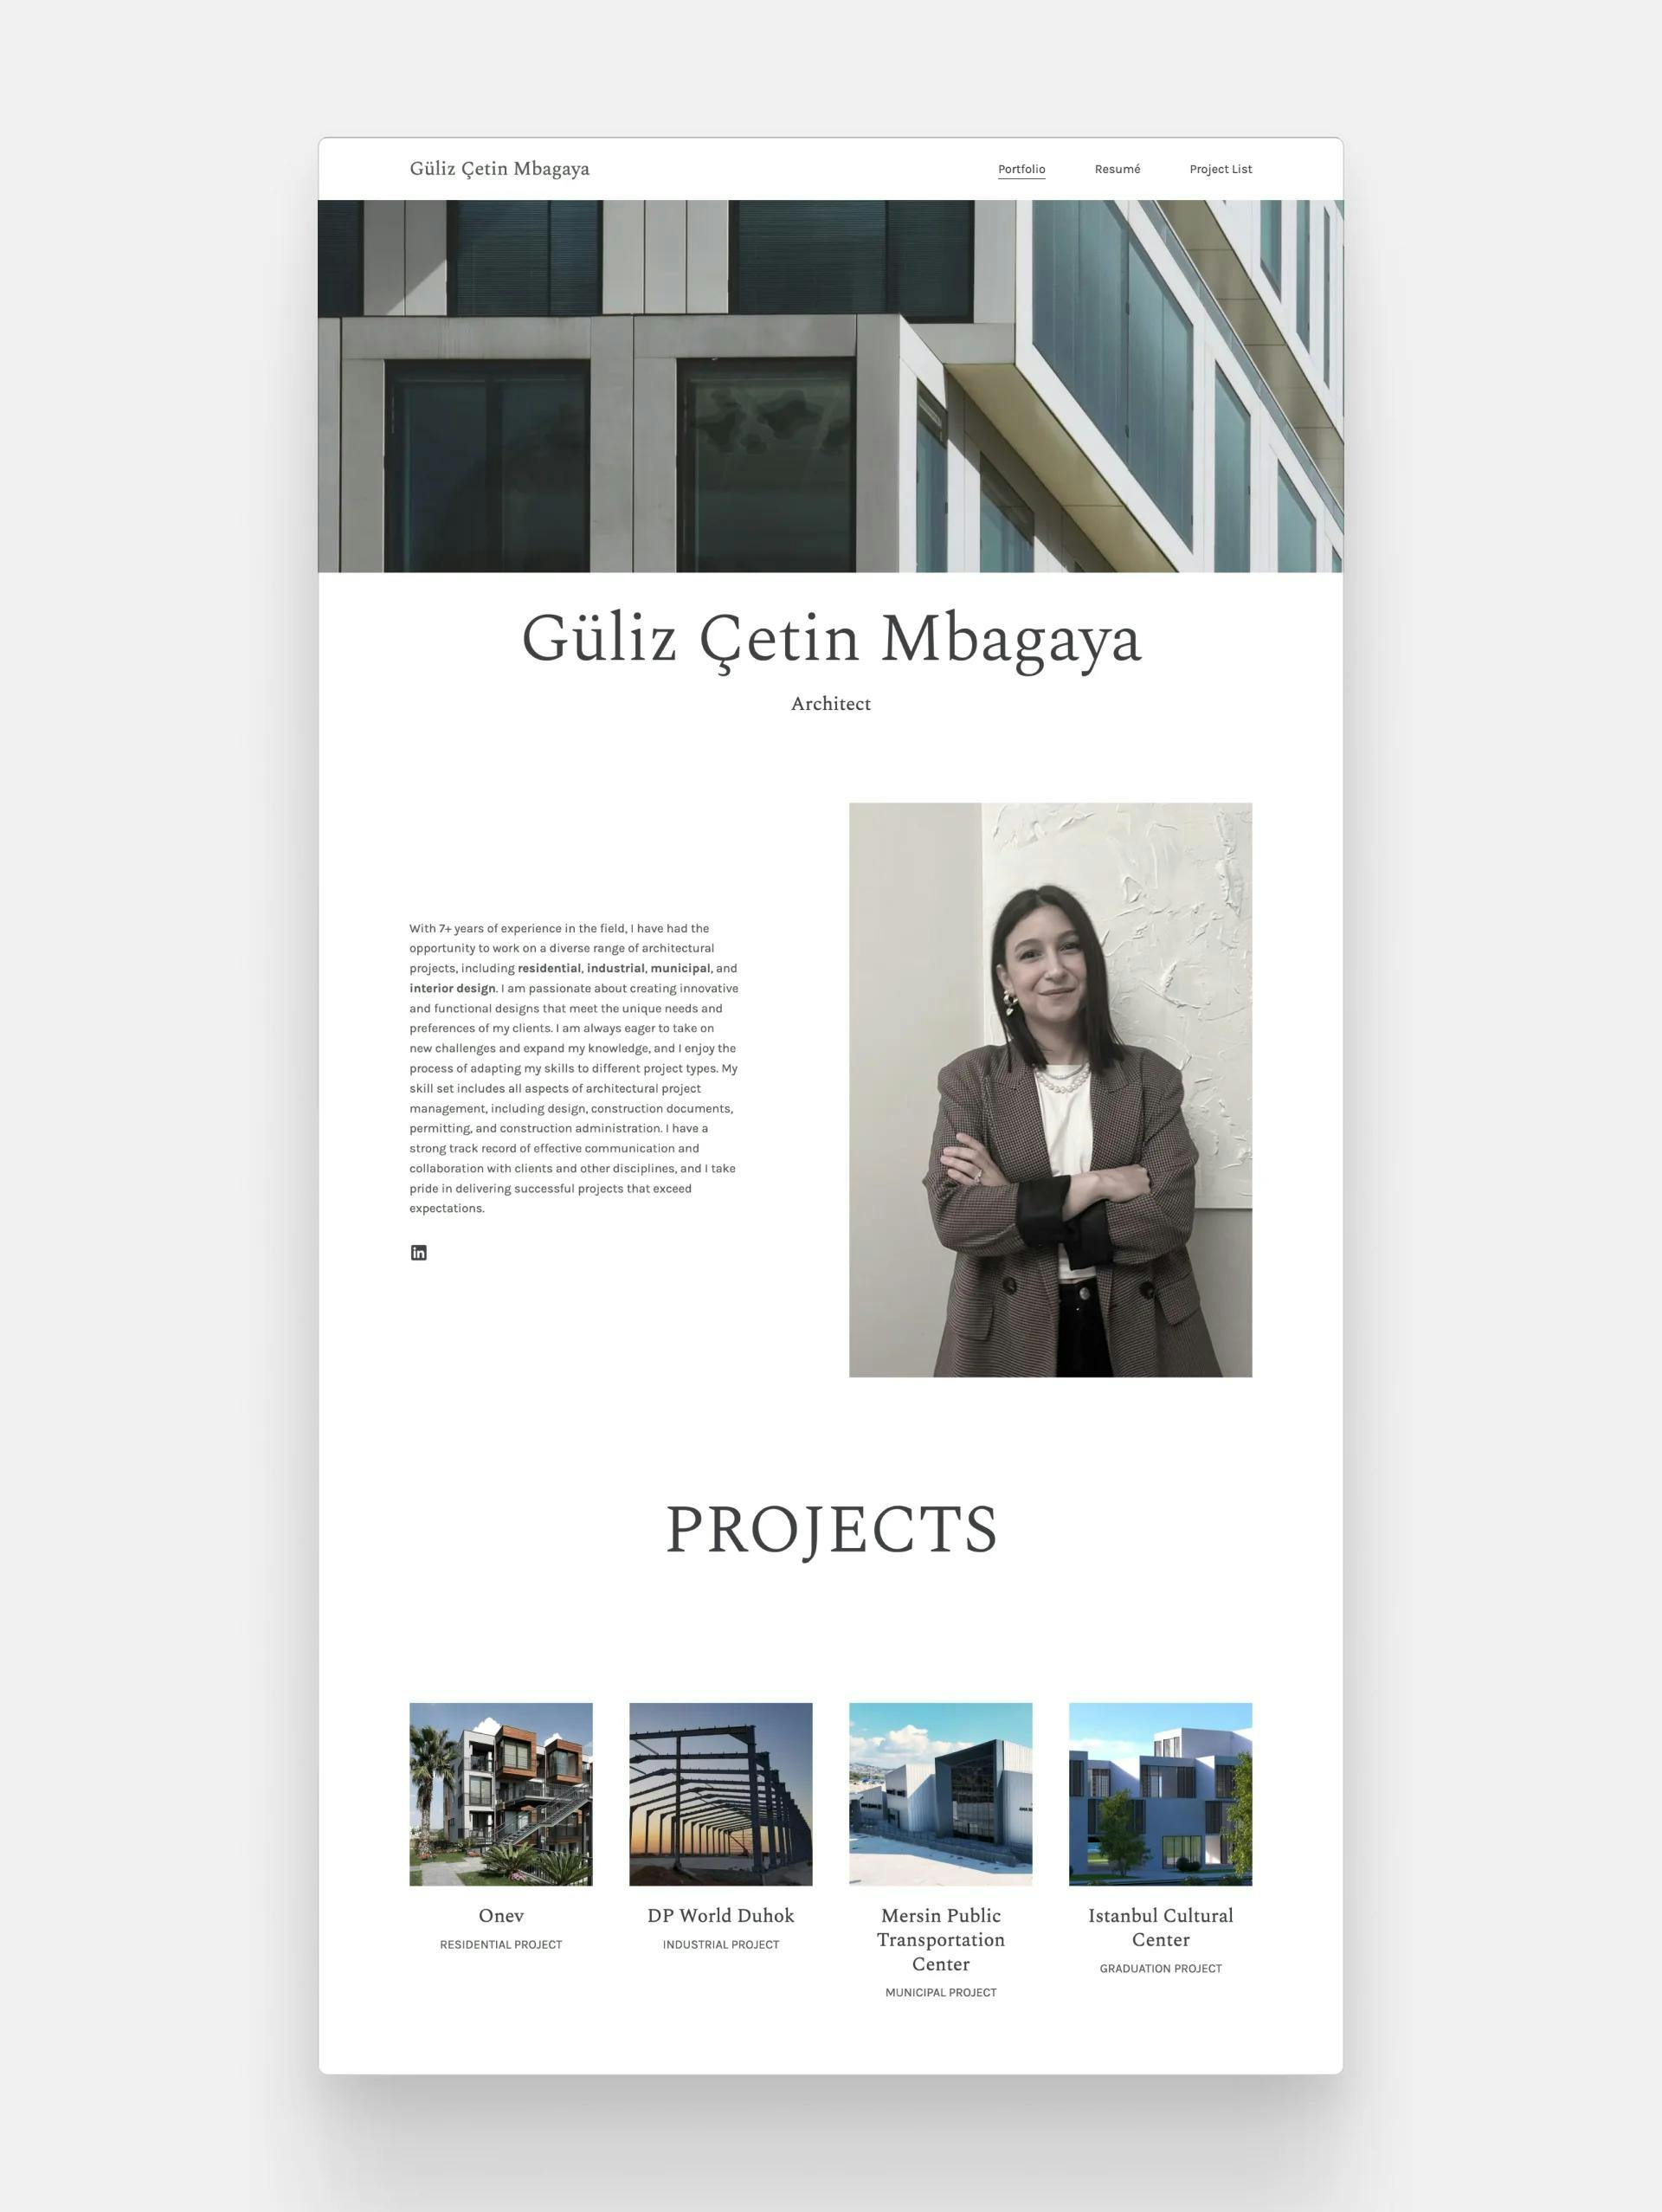 Rolling screenshot of Güliz Çetin Mbagaya's architecture website with a large hero image of a skyscraper facade